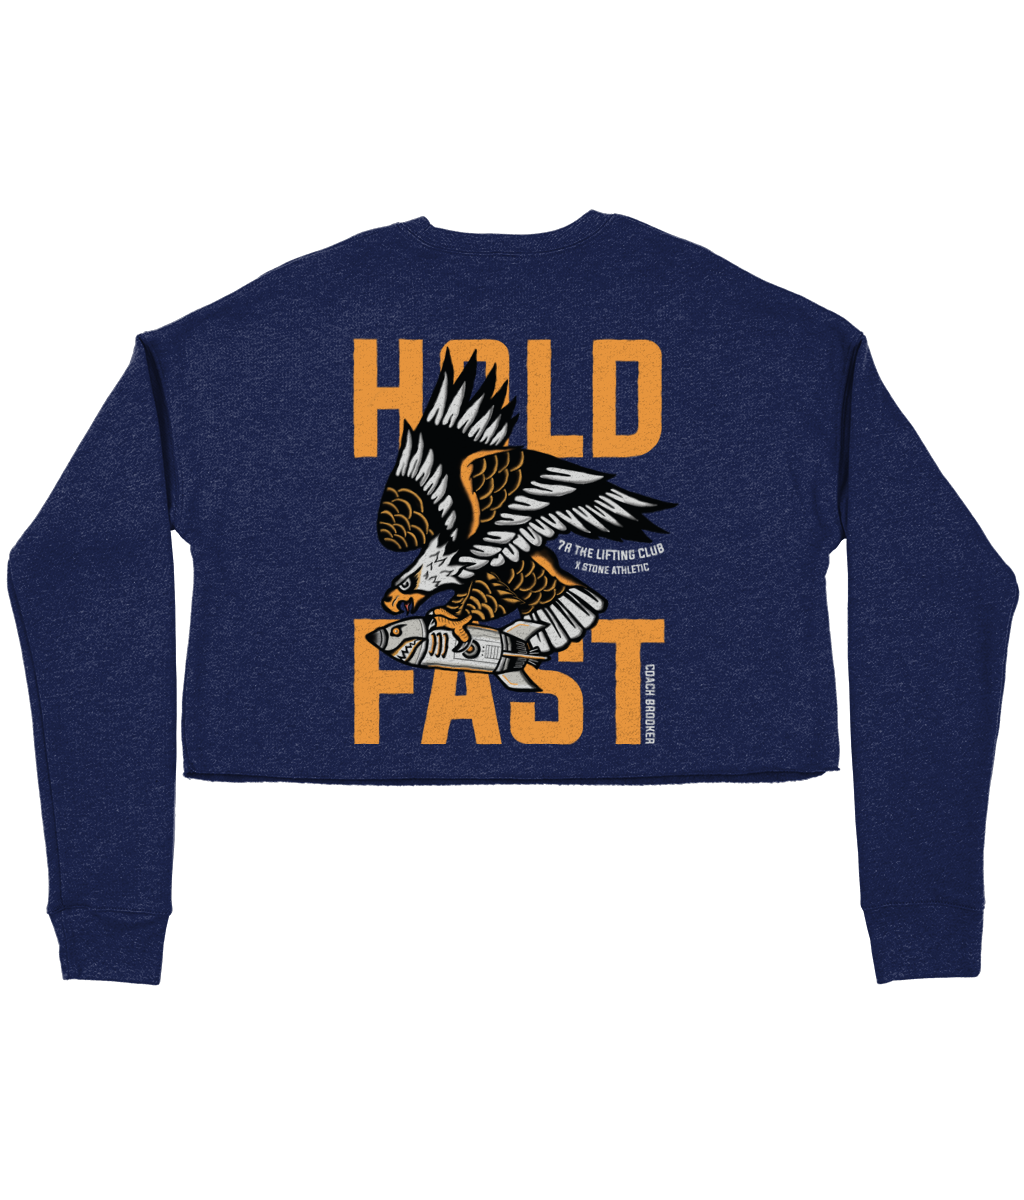 Hold Fast Cropped Sweatshirt - 7R Lifting Club